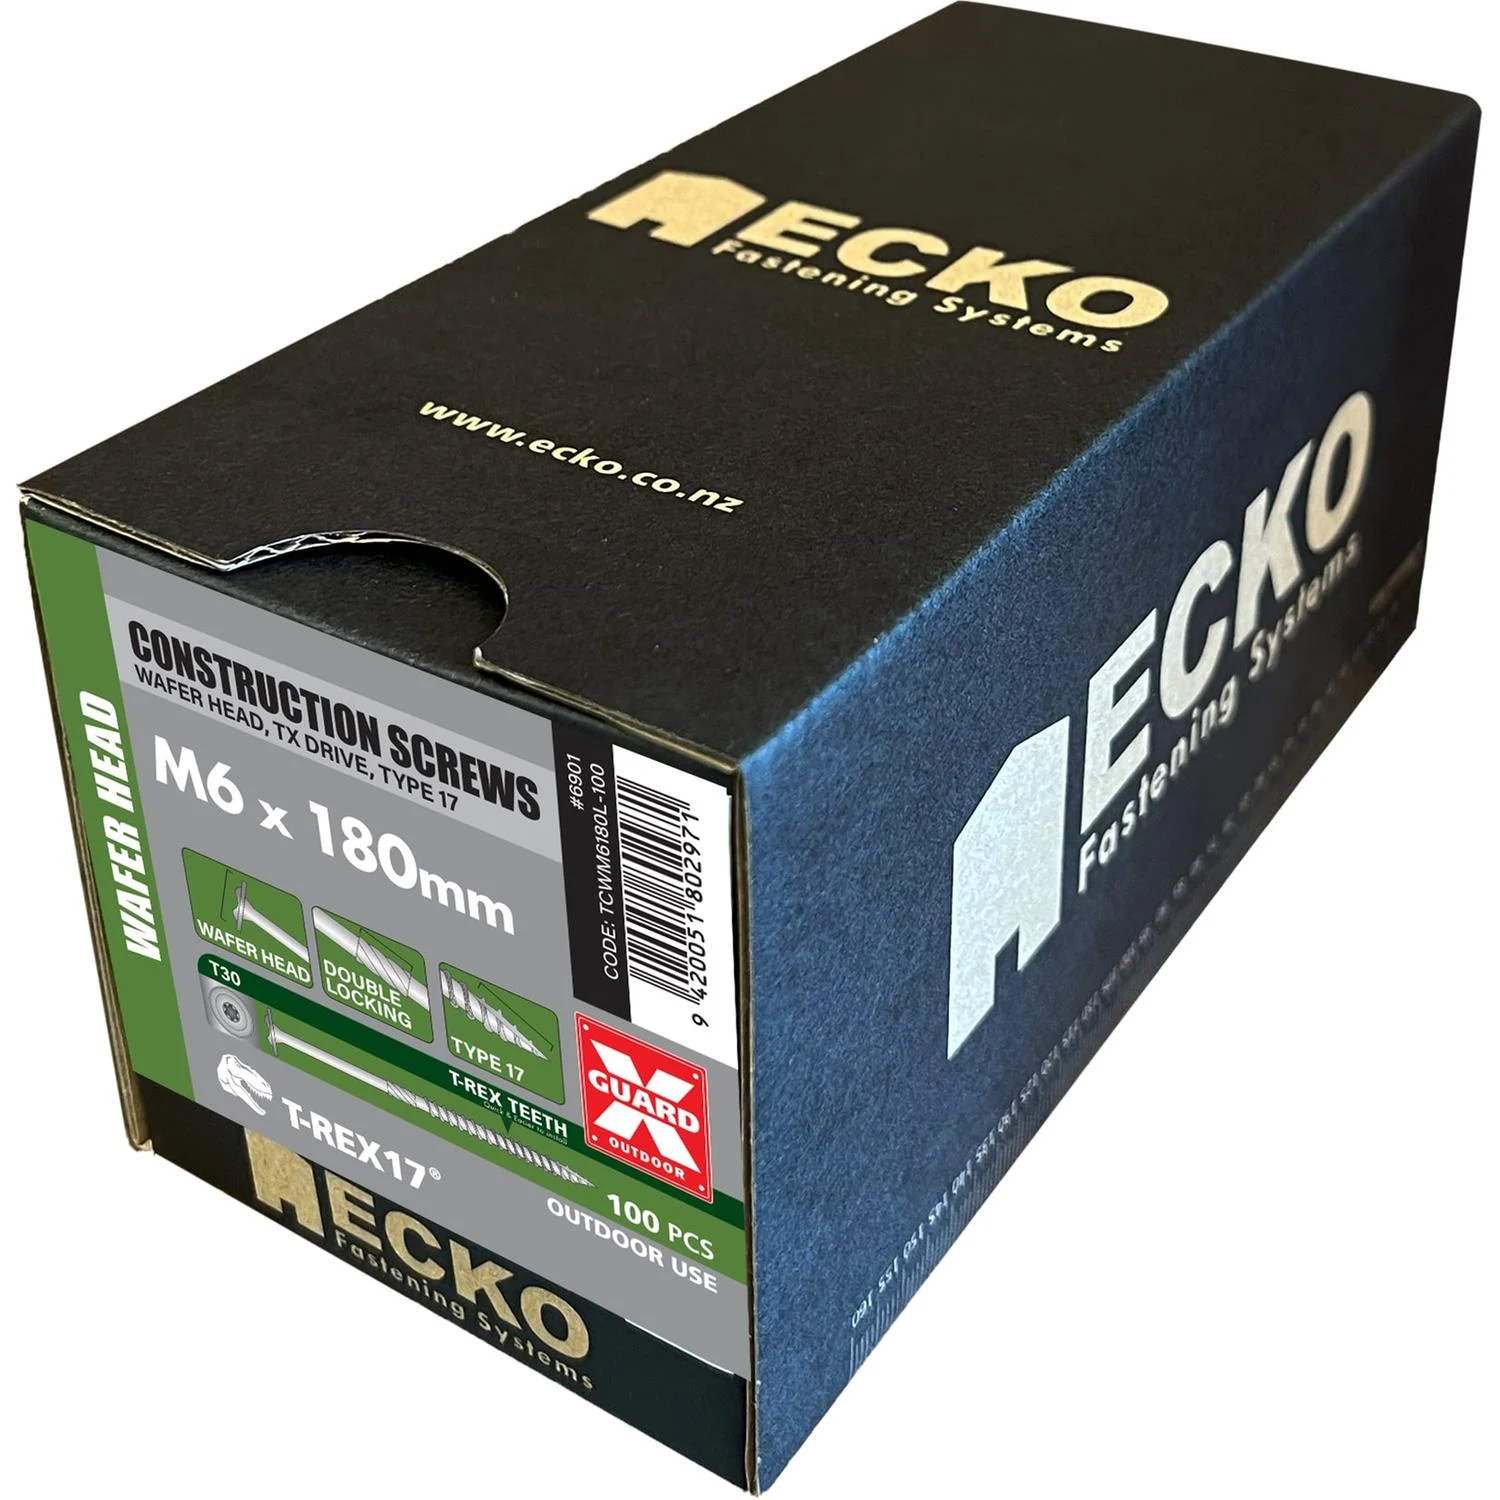 Ecko T-Rex17 Wafer Head Construction Screws M6 X 180Mm (800 Pack)